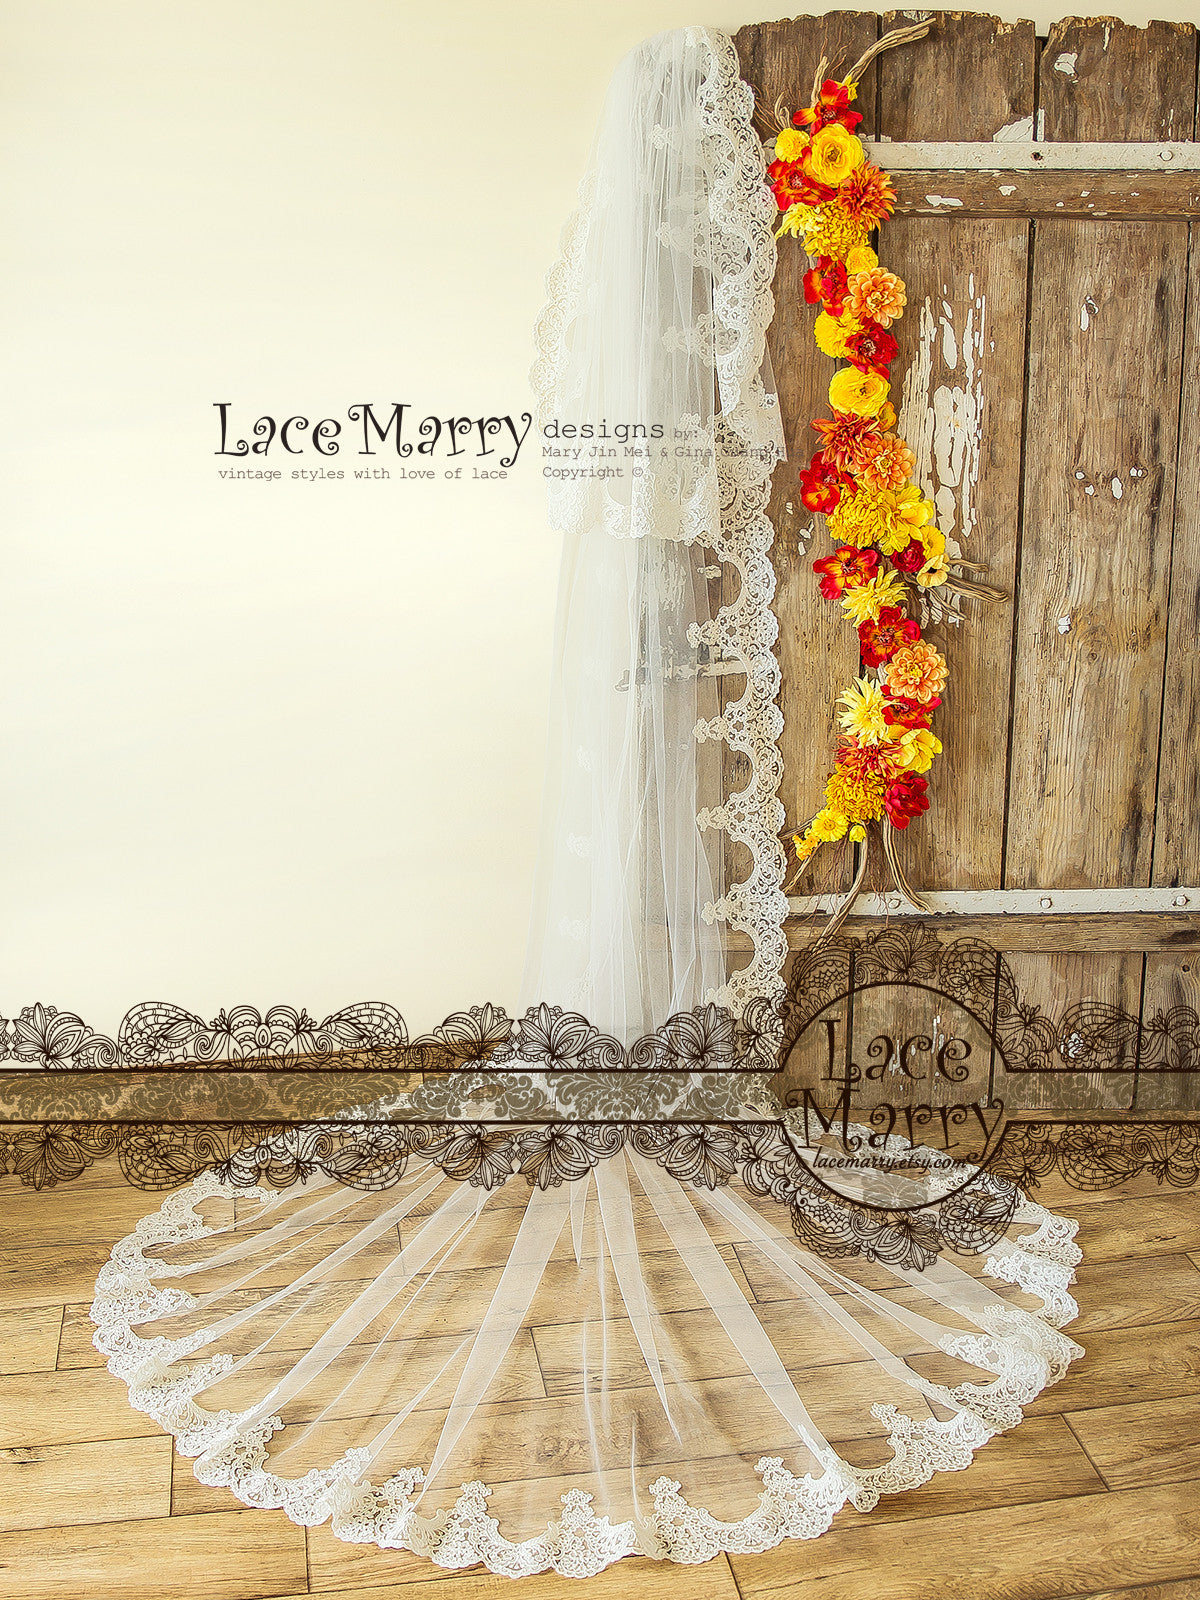 HW Veil Waltz Length Wedding Veil with Romantic Lace Motifs